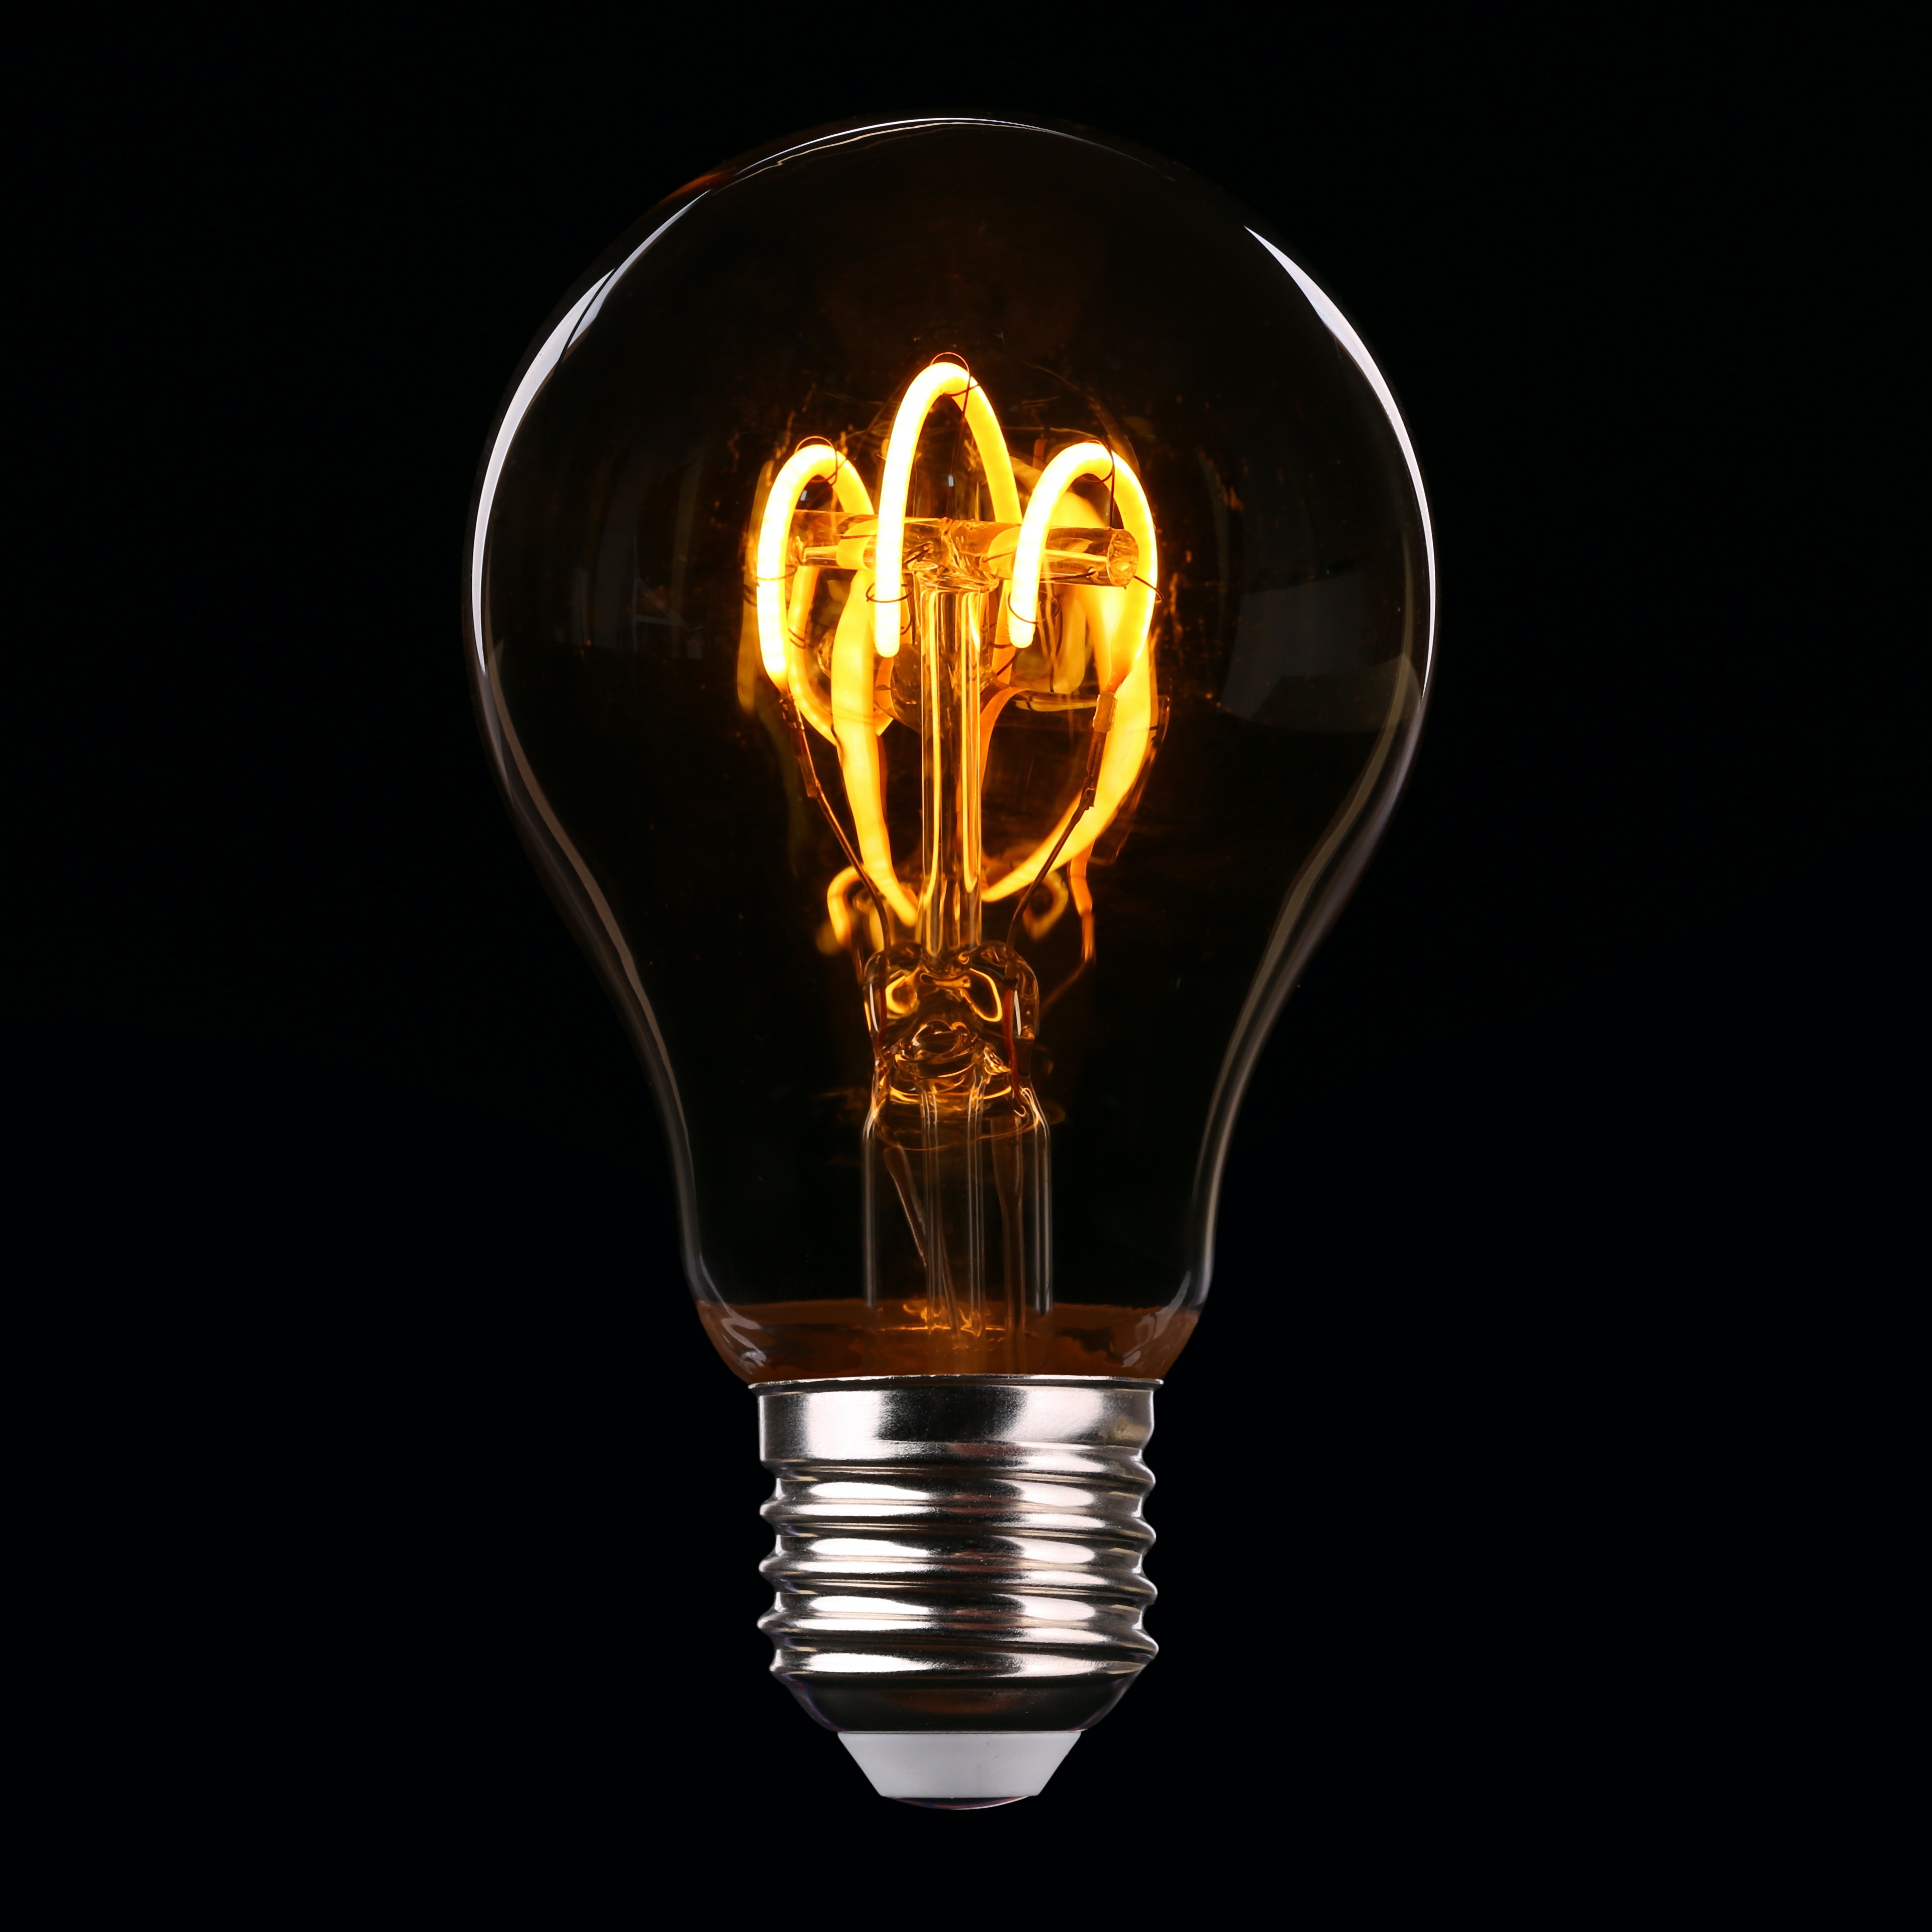 light bulb on a black background